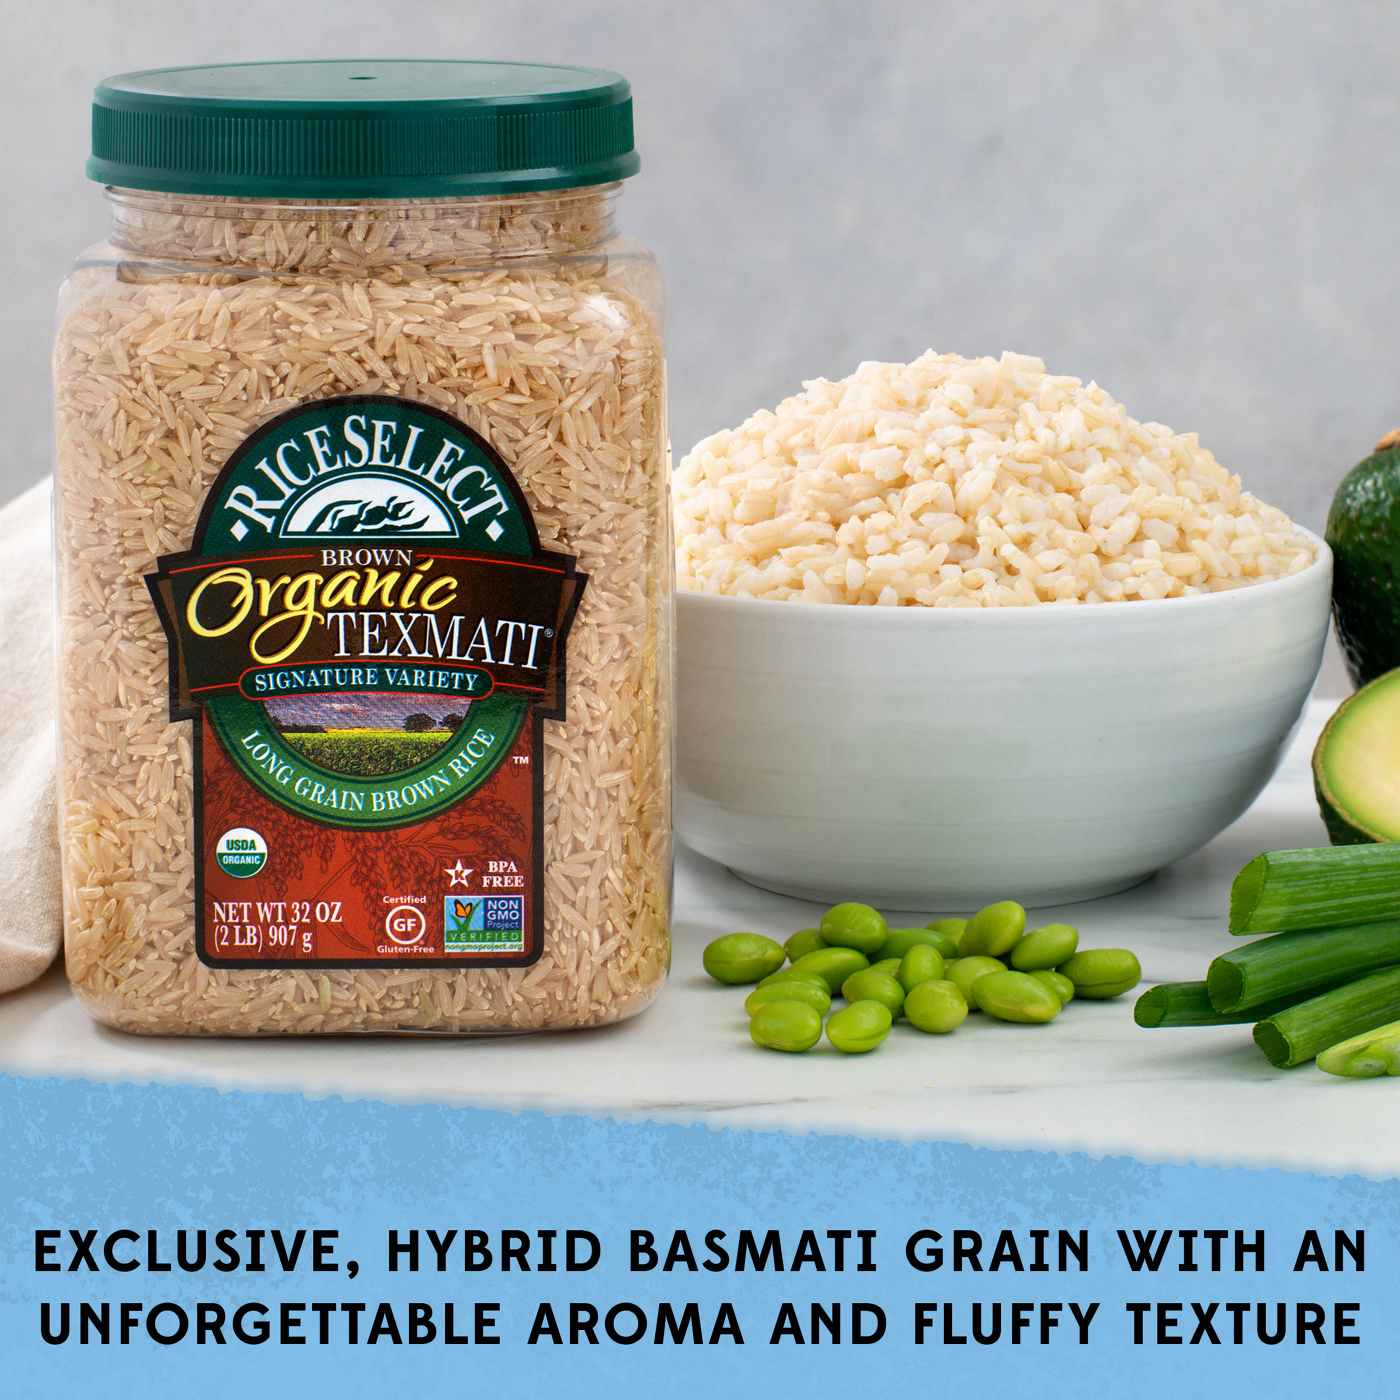 RiceSelect Organic Texmati Basmati Brown Rice; image 5 of 5